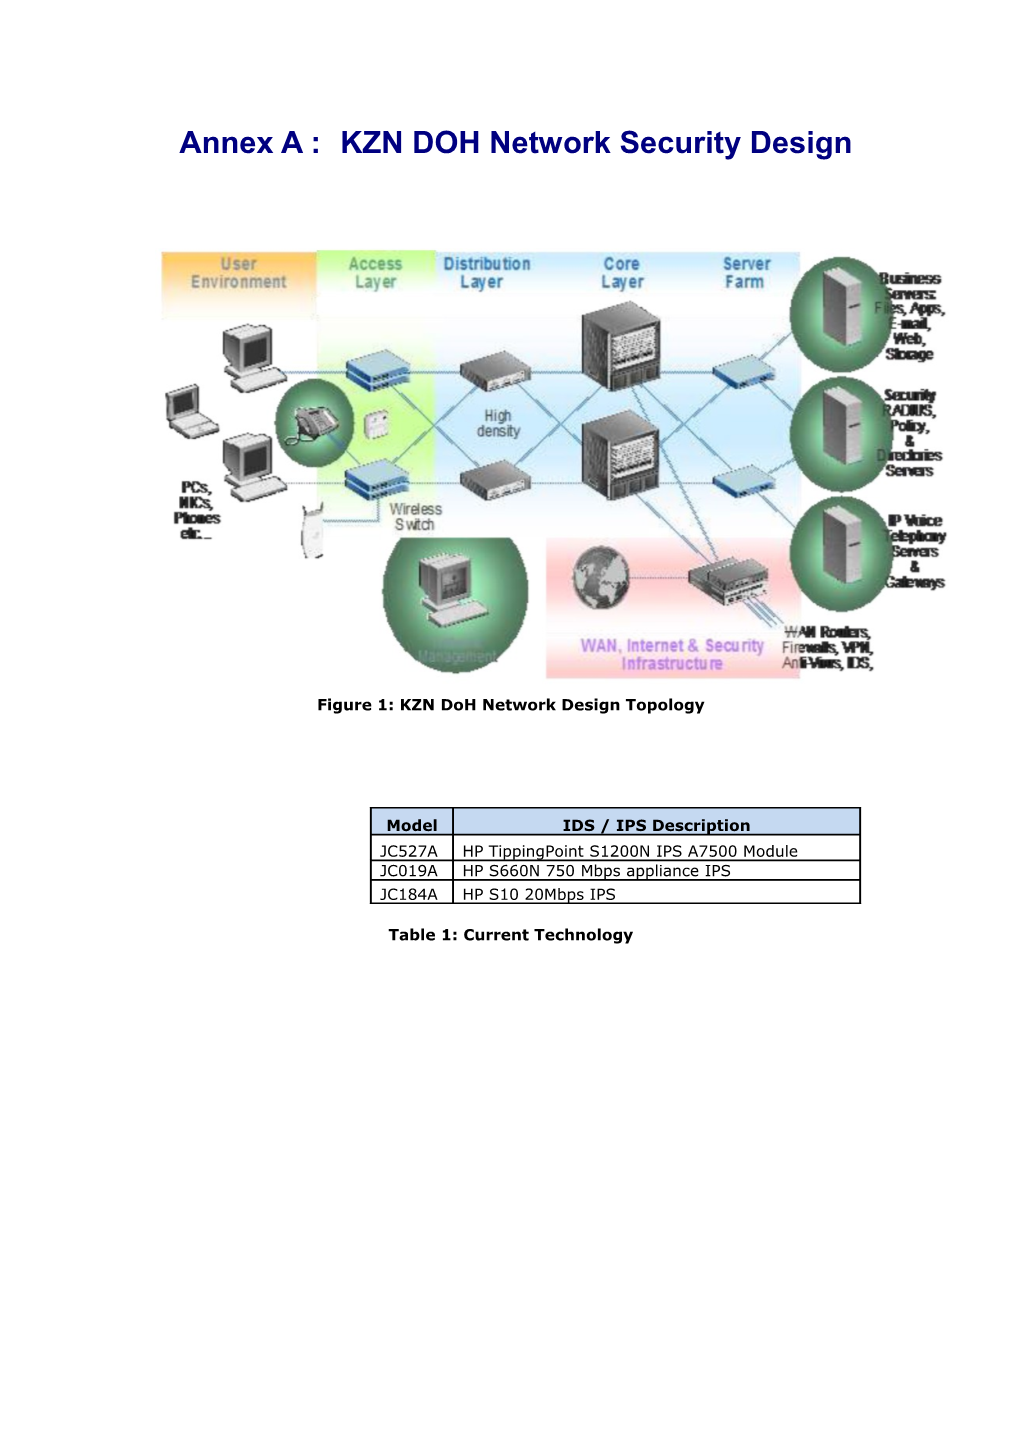 Figure 1: KZN Doh Network Design Topology